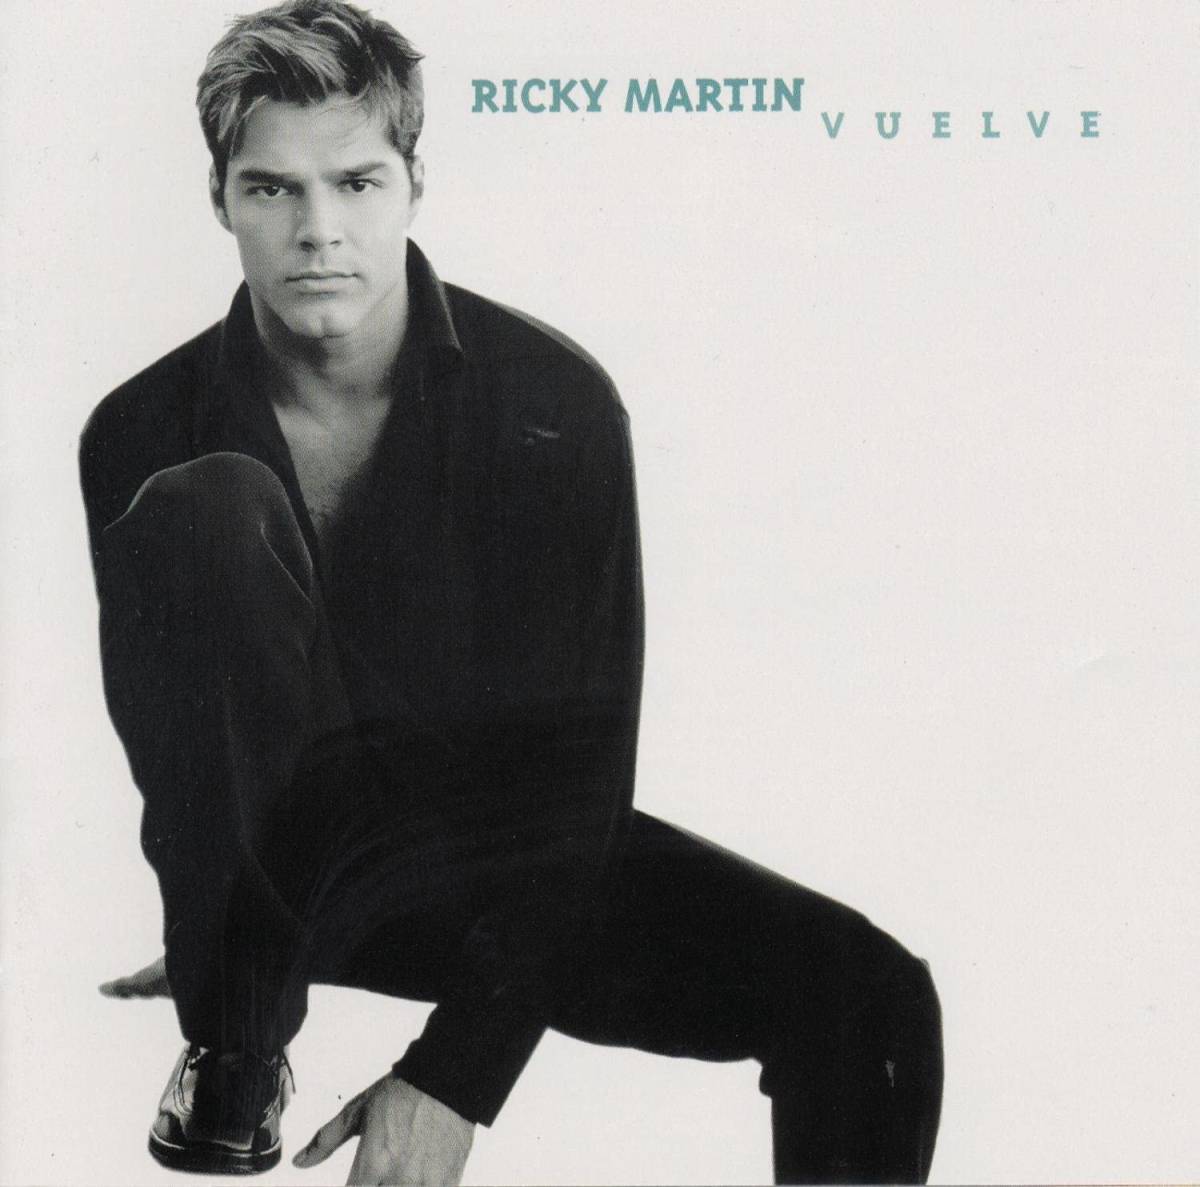 Vuelve Ricky Martin Import CD